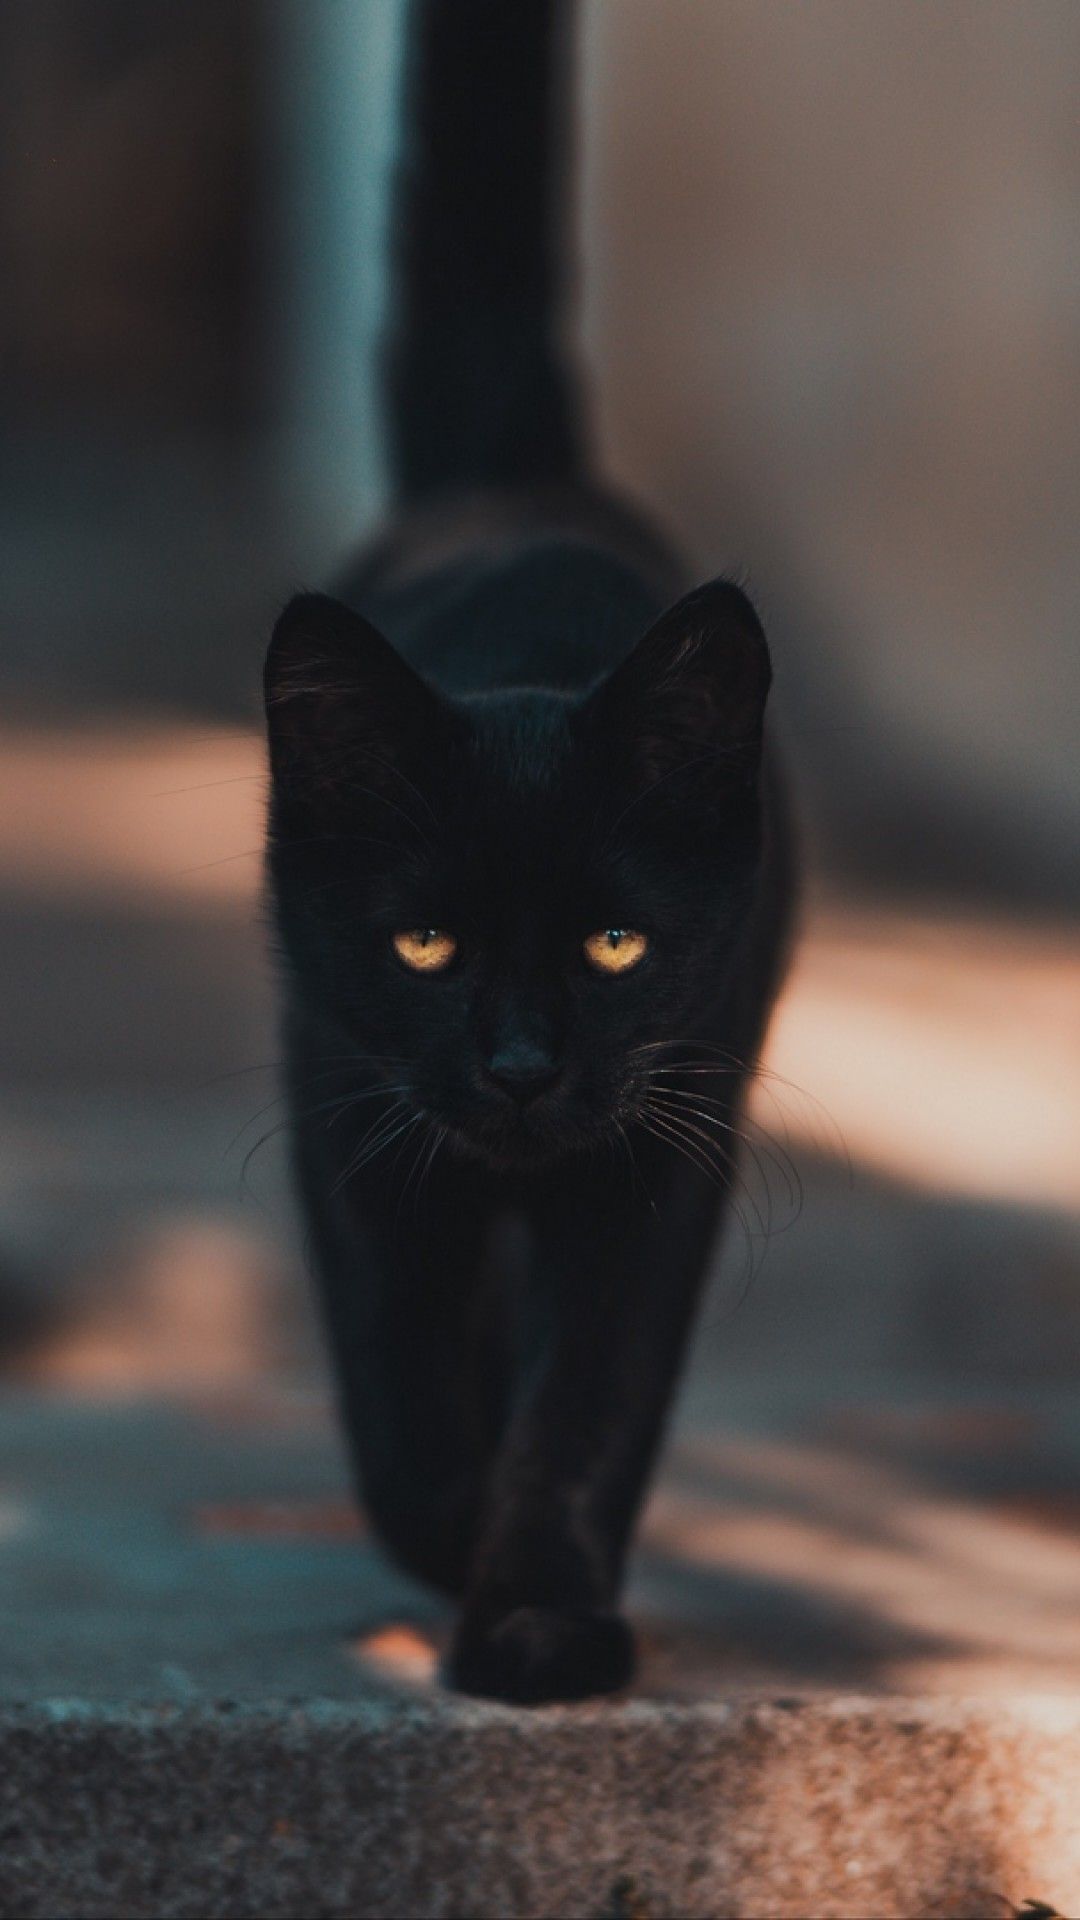 Black cat walking HD Wallpaper iPhone 6 / 6S Plus Wallpaper